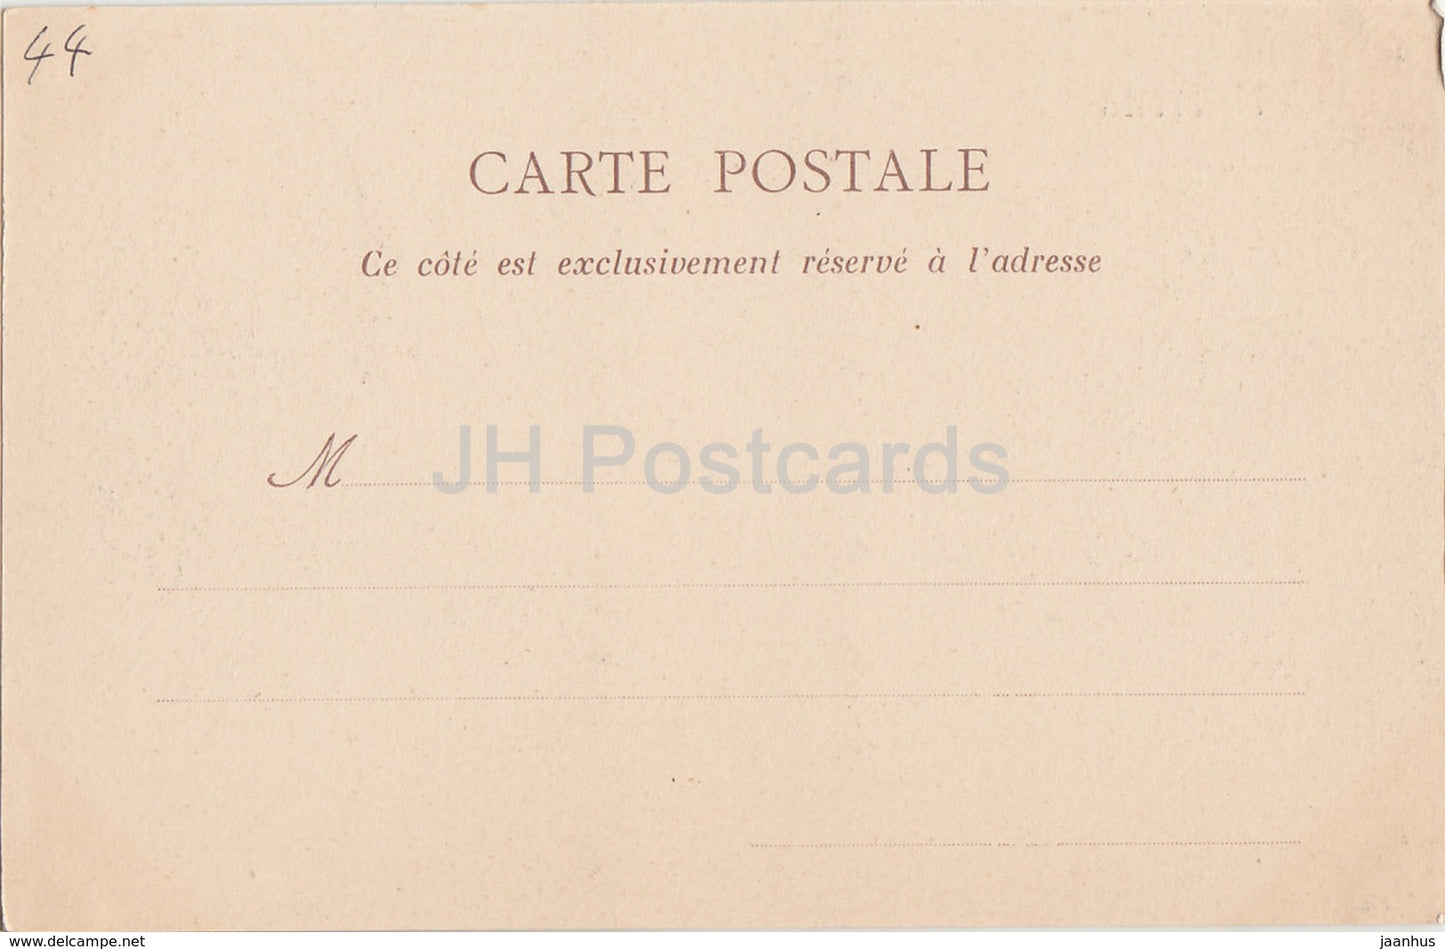 Nantes - Le Chateau - Entree Principale - Schloss - alte Postkarte - Frankreich - unbenutzt